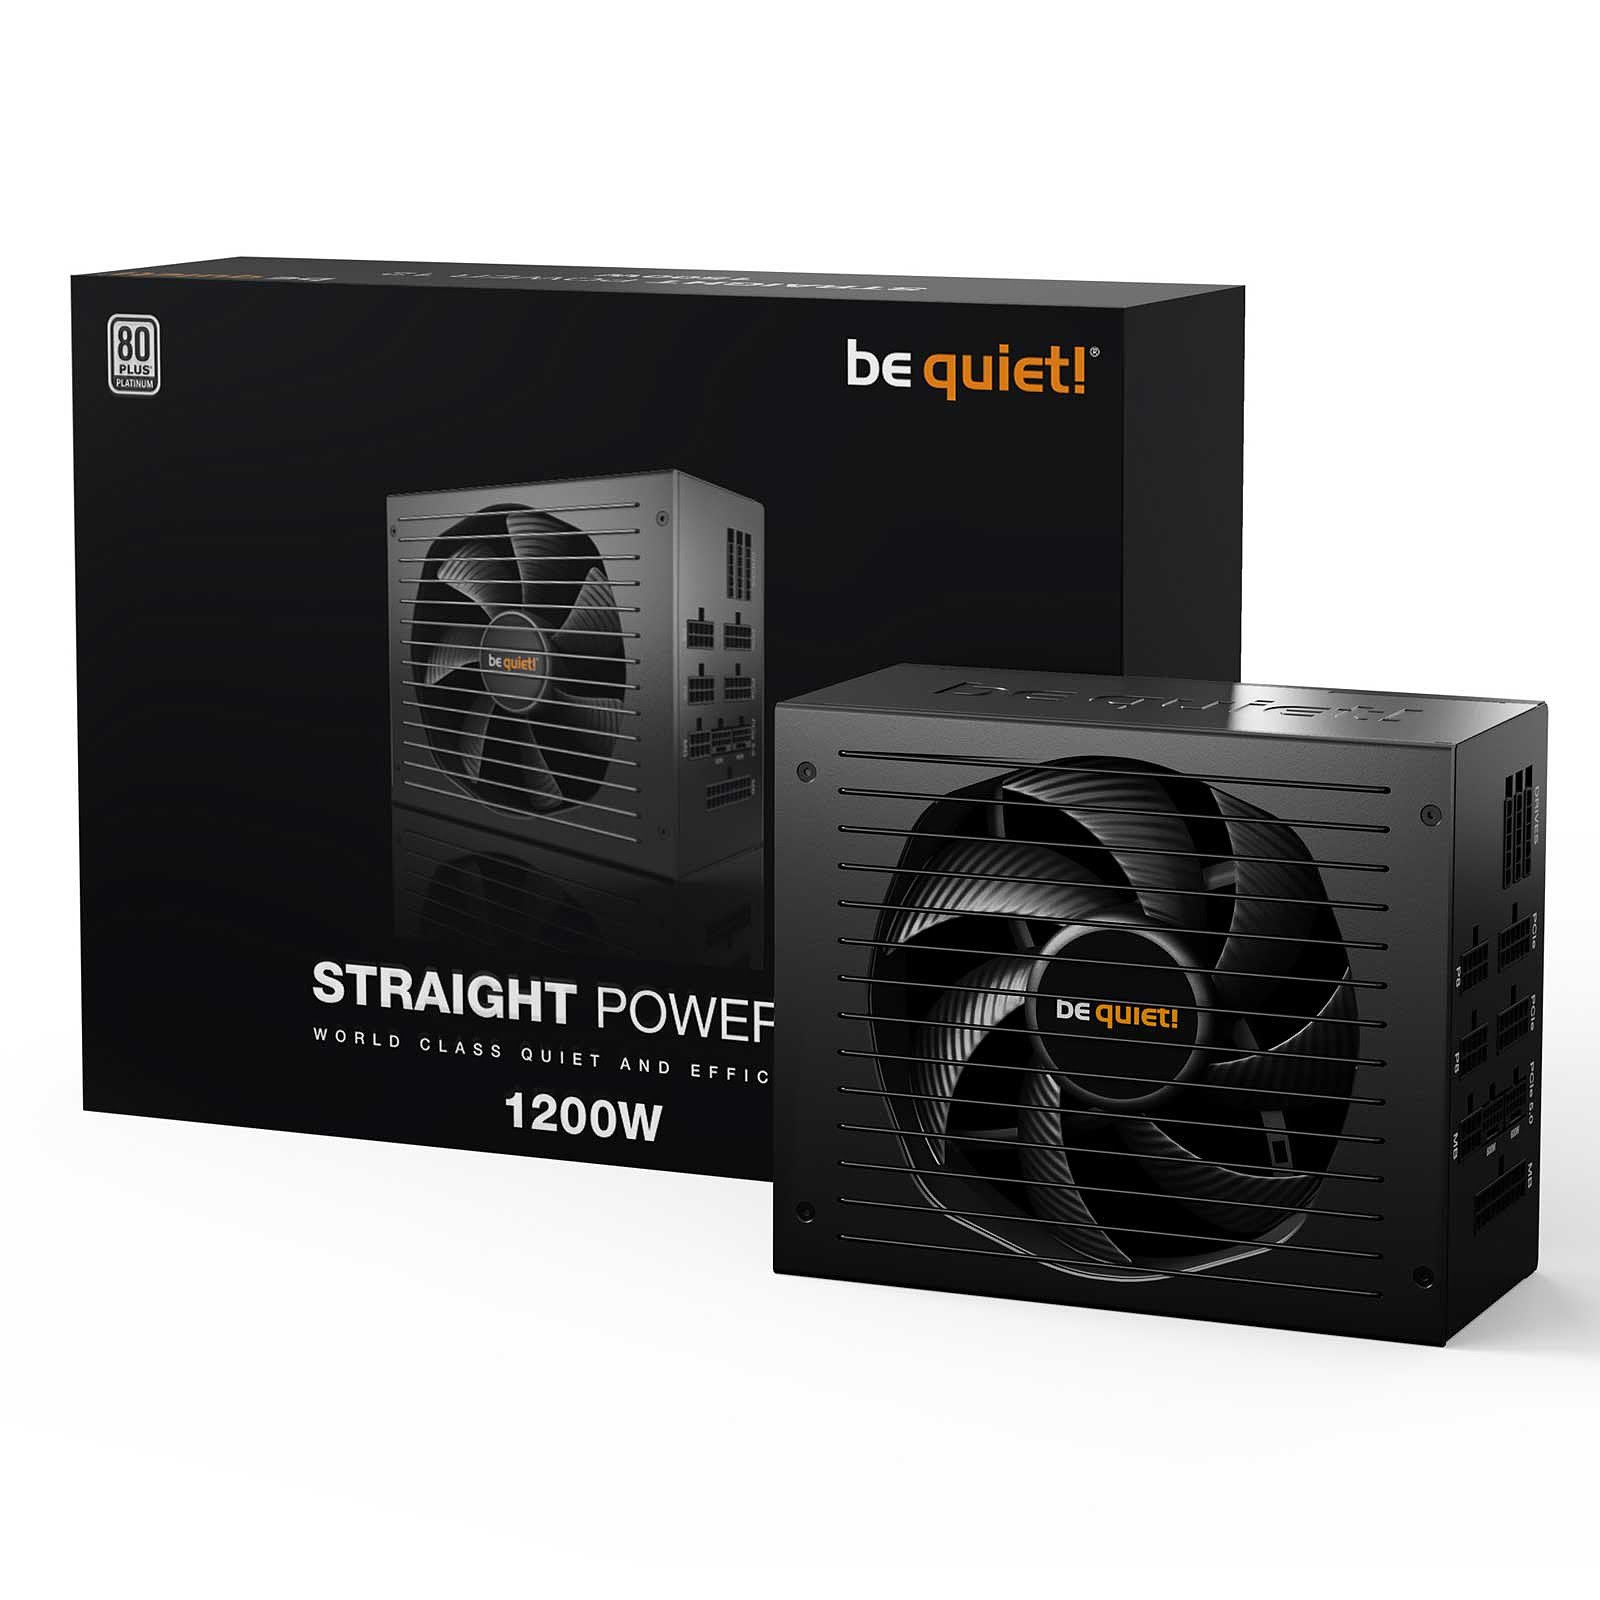 be quiet! atx 1200w - straight power 12 80+ plat - bn339